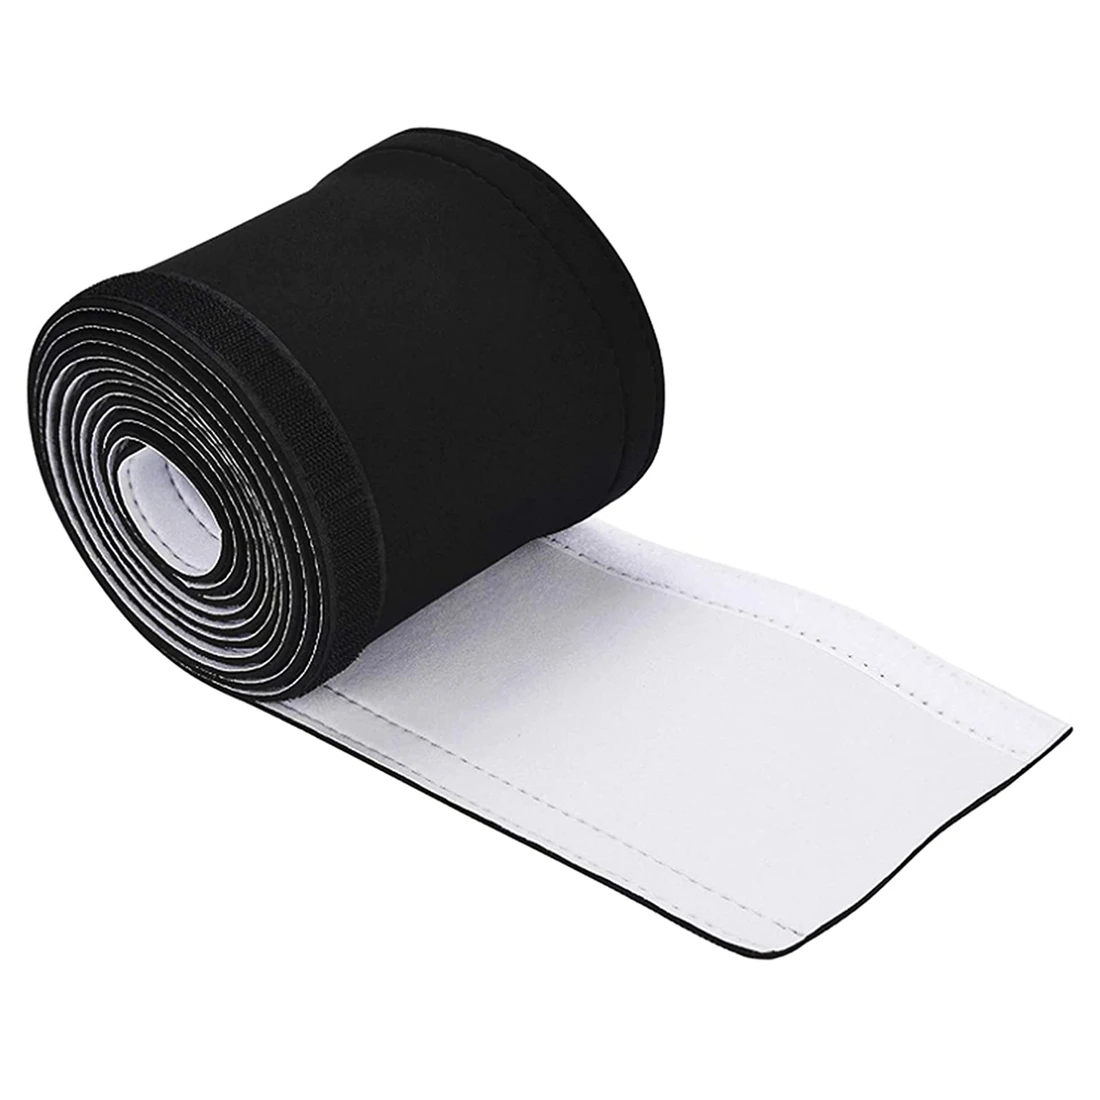 

Neoprene Troll Sleeve, Trolling Motor Wires/Cable Organizer Sleeve - Black/White (1Pack),60 Inch